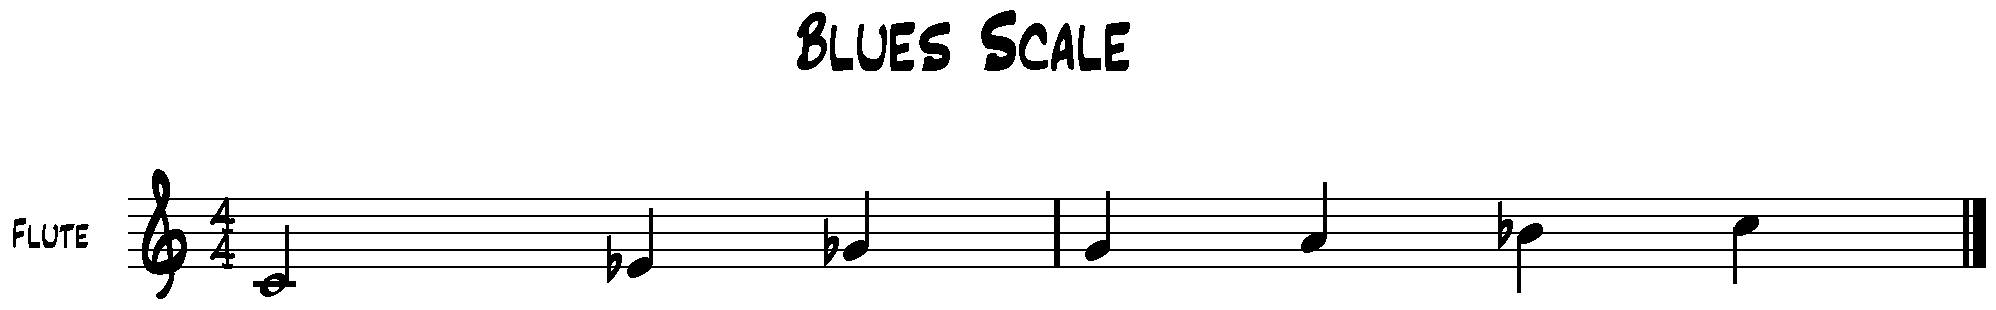 Scale blues : ogni tonalità